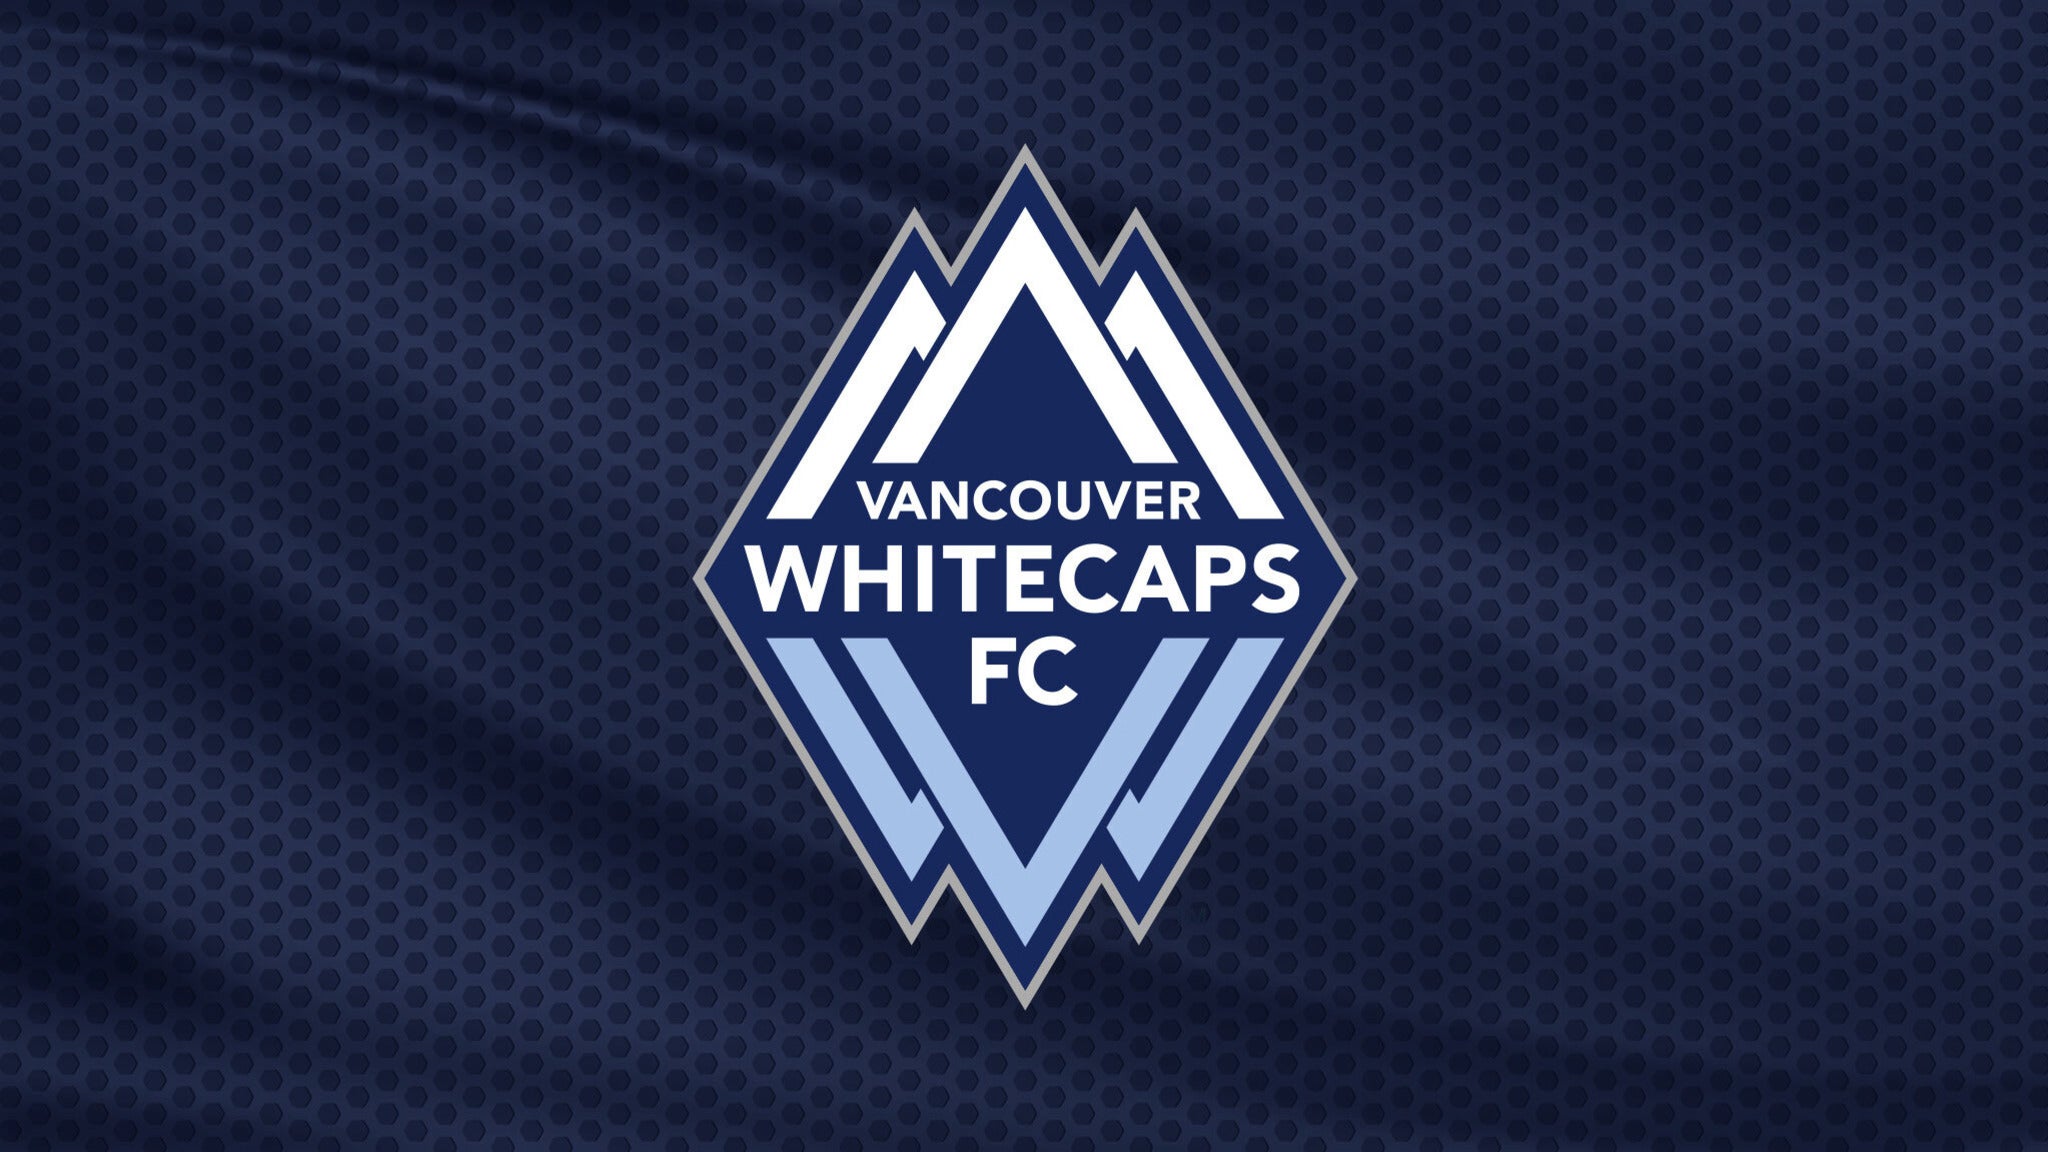 Vancouver Whitecaps FC vs. LA Galaxy in Vancouver promo photo for Save The Fees Promo presale offer code